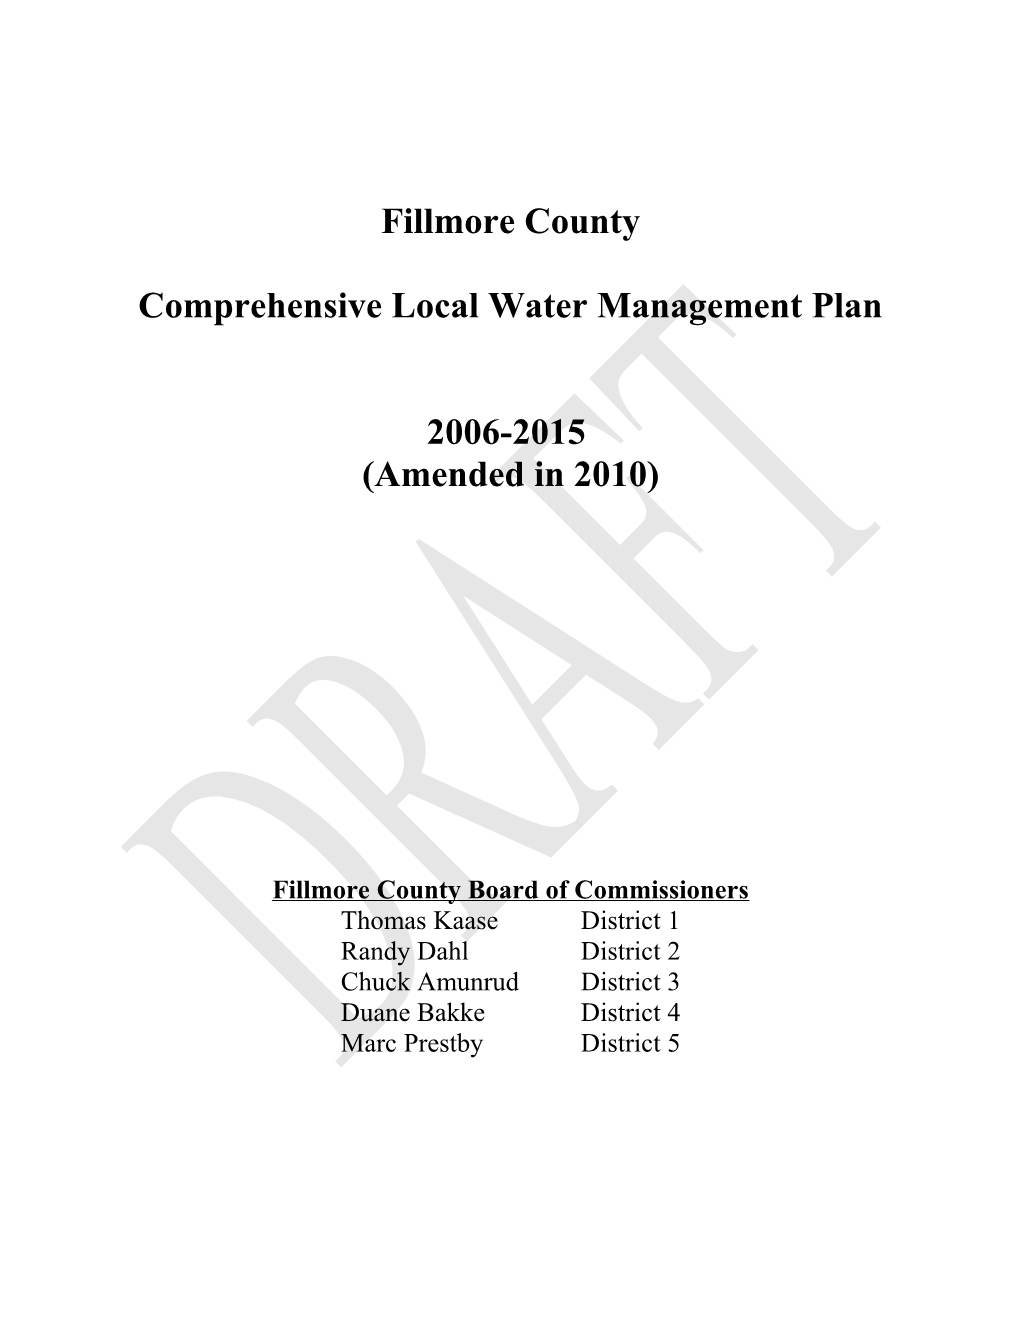 Comprehensive Local Water Management Plan